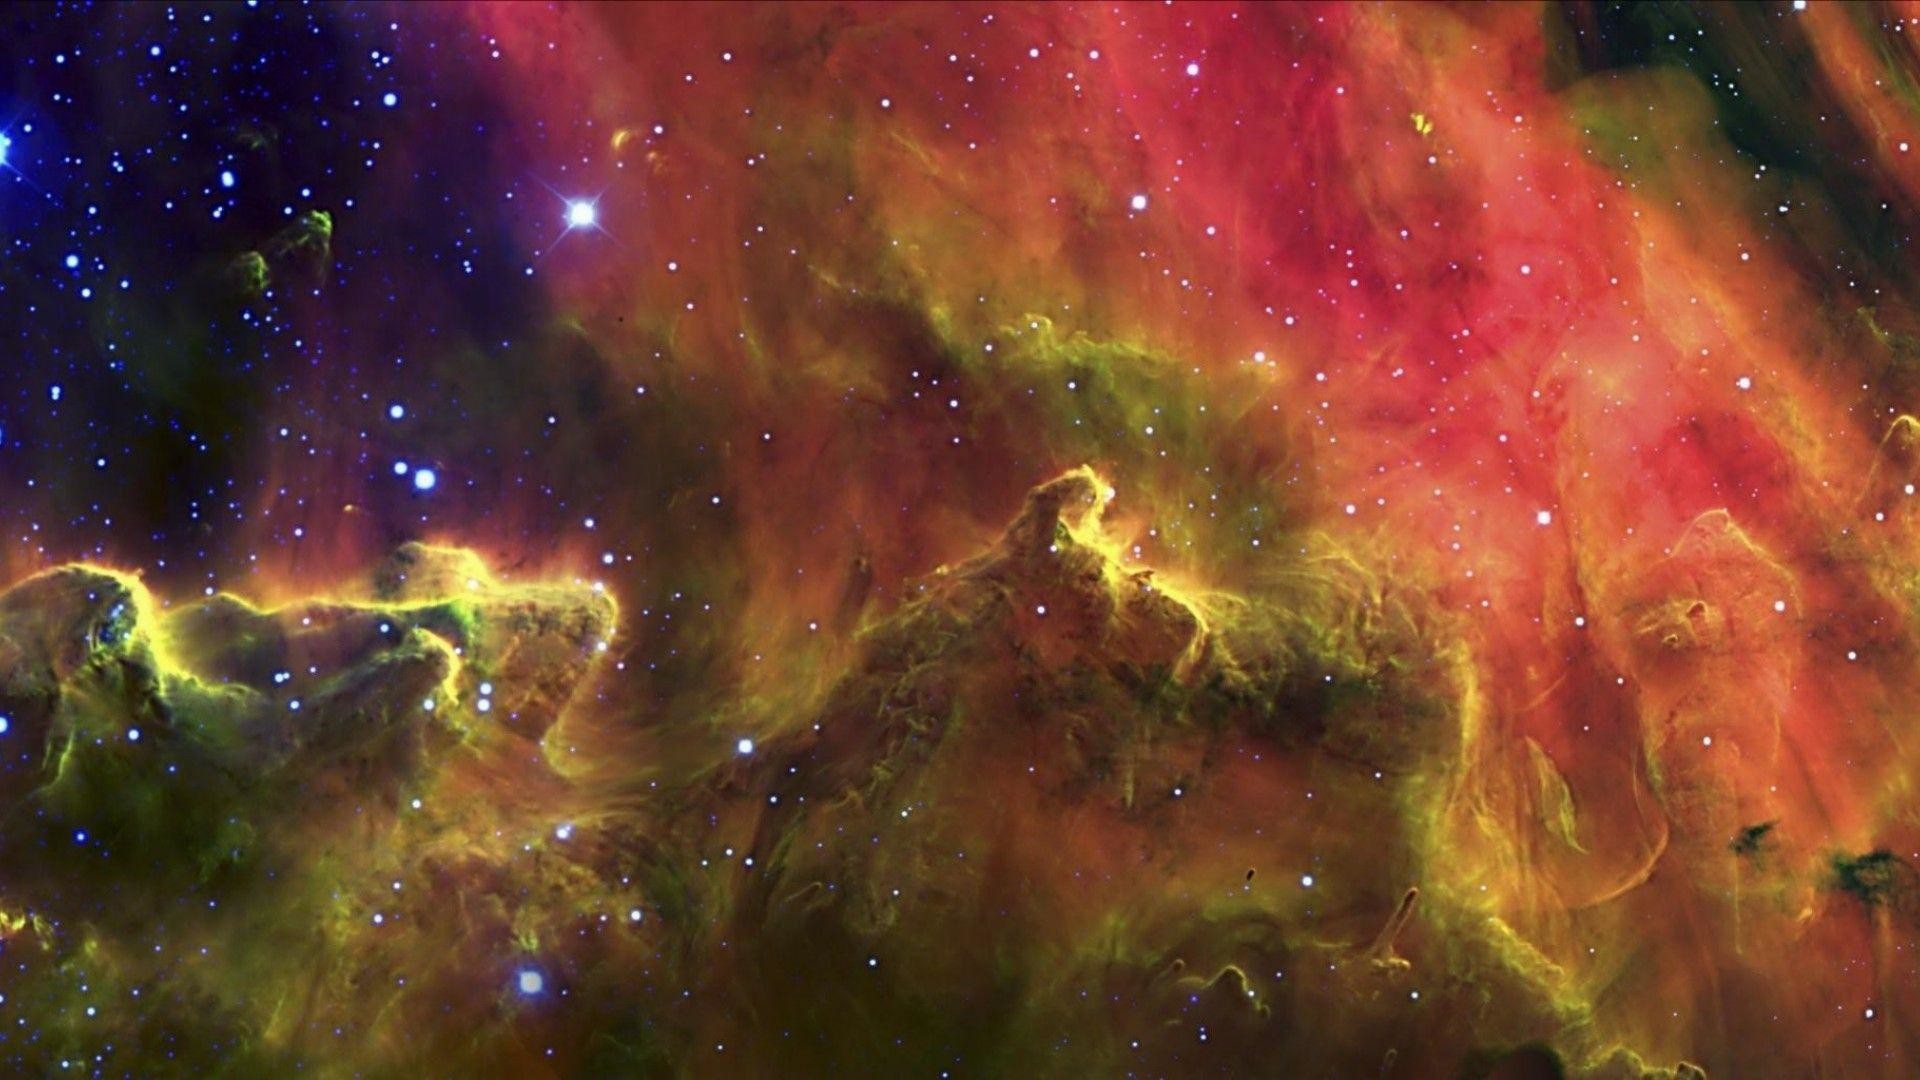 Wallpaper.wiki Hubble Desktop Backgrounds 1920×1080 PIC WPD002233